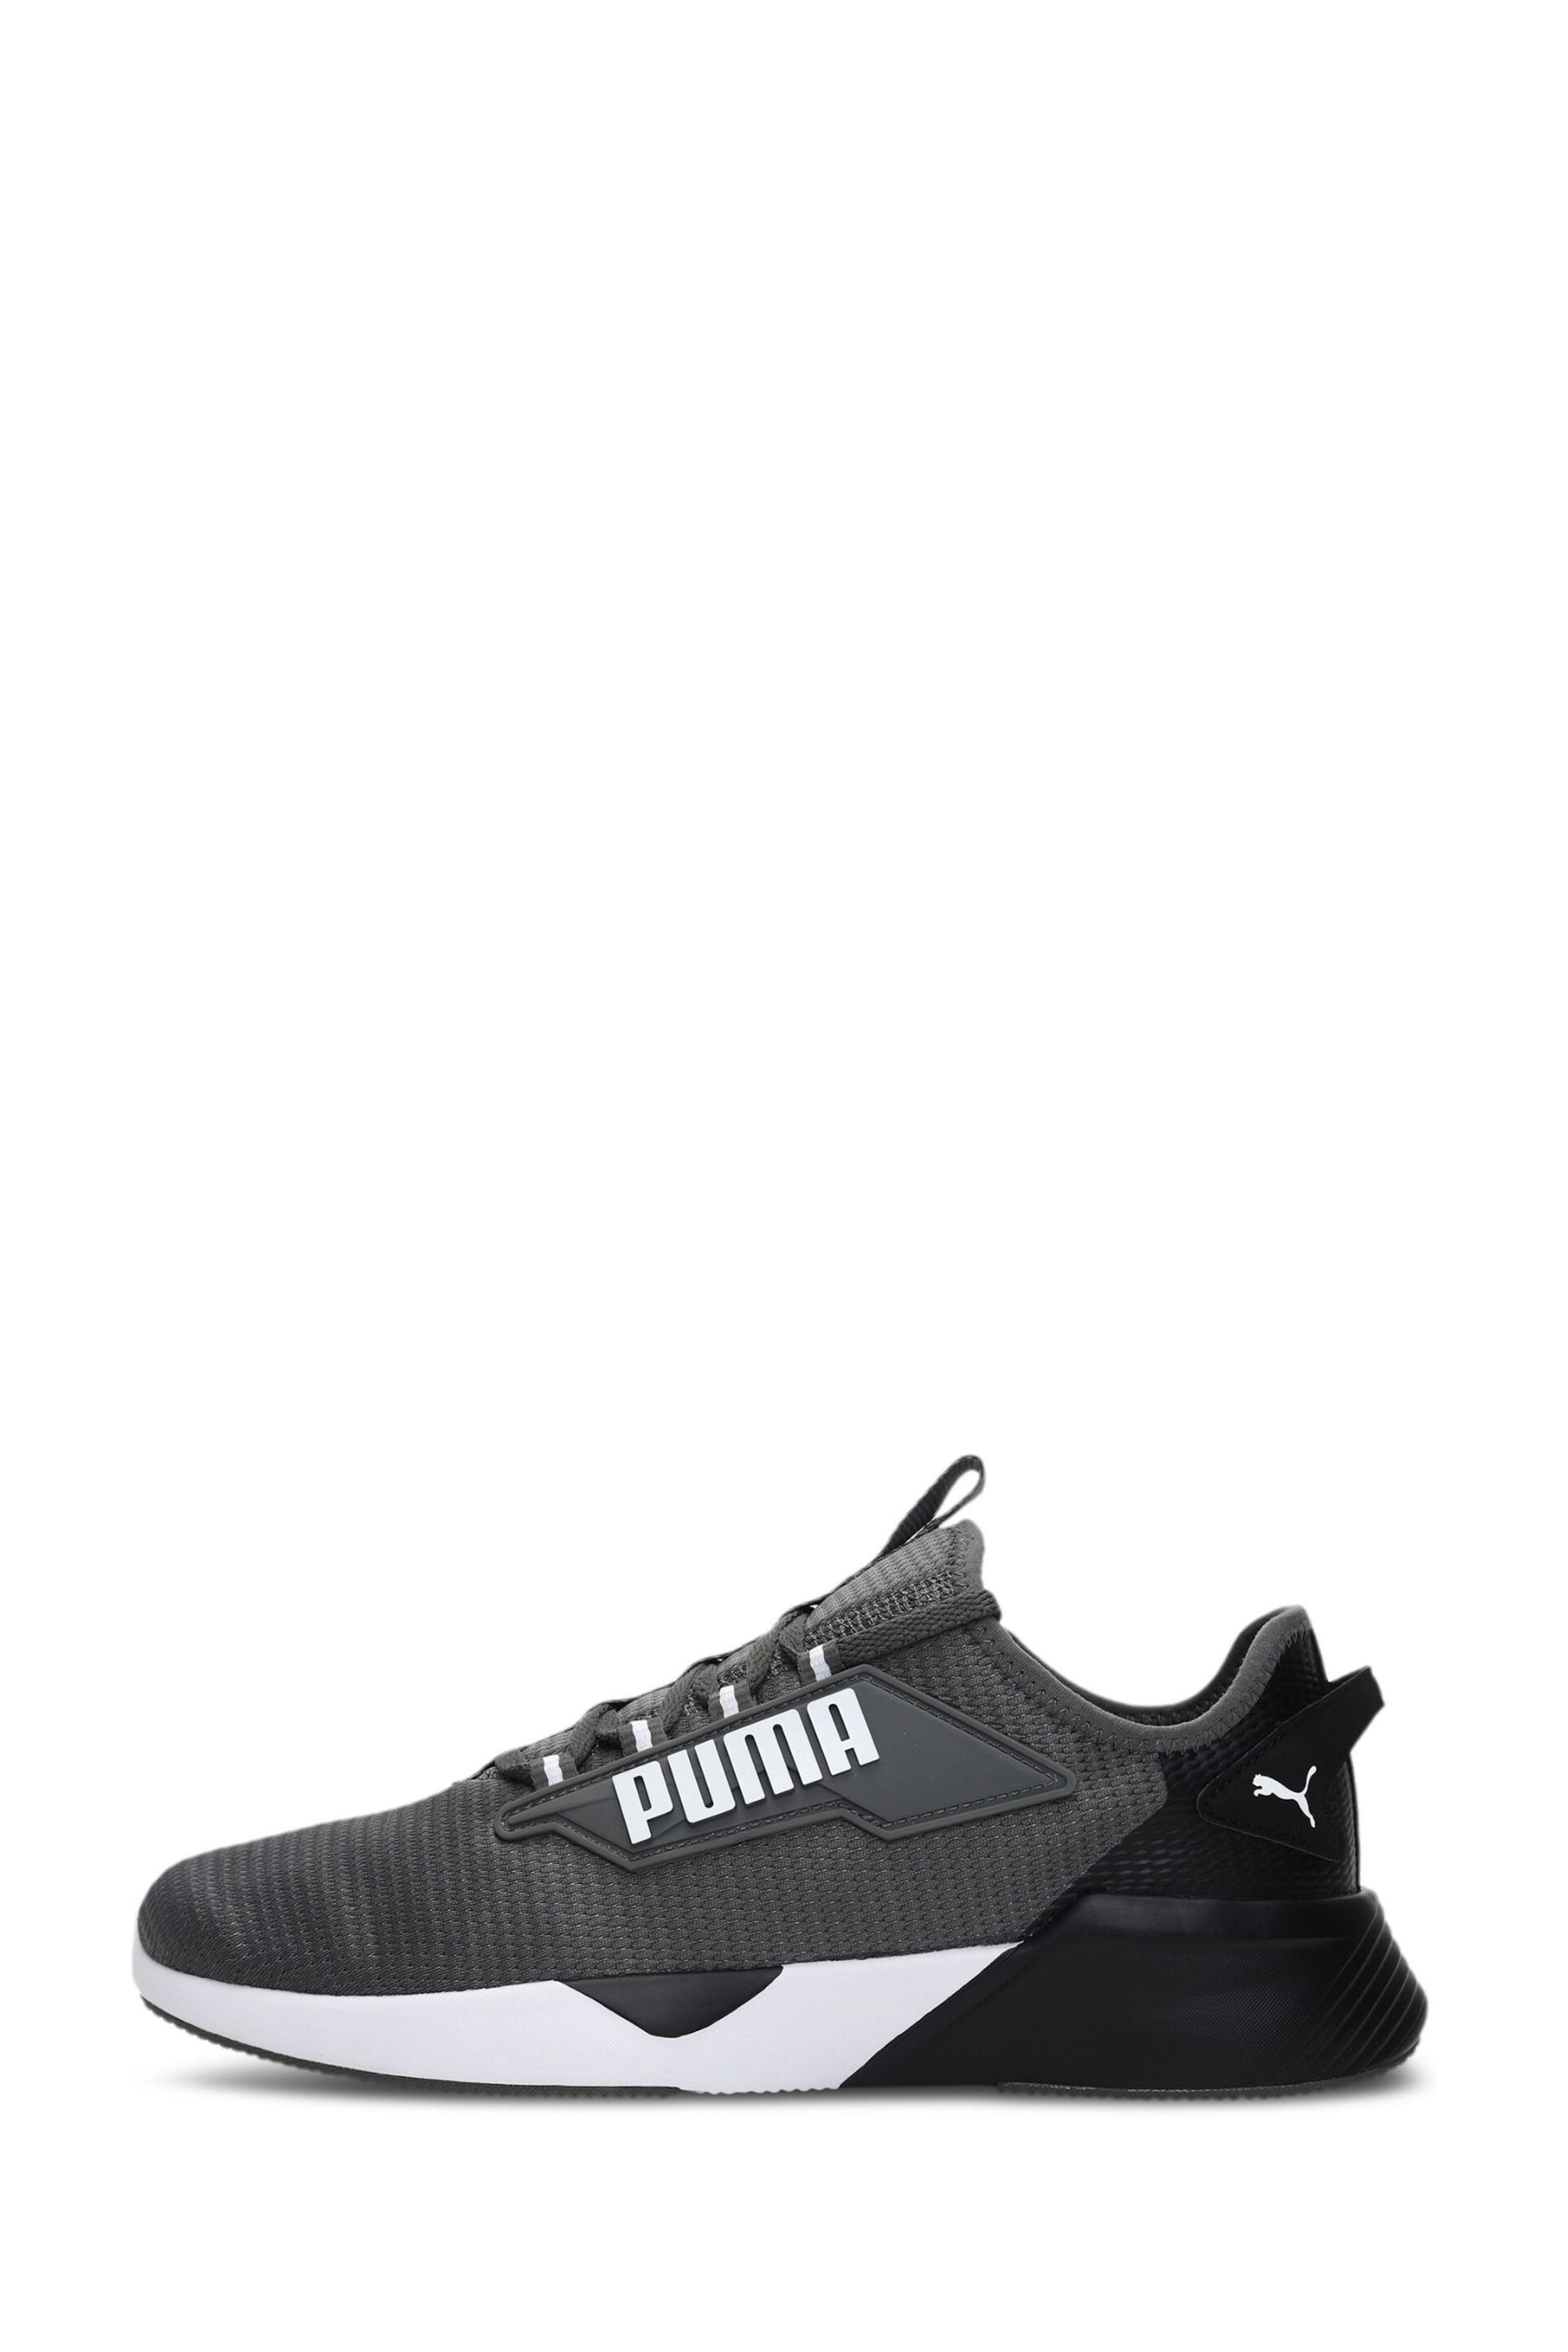 Puma Grey Retaliate 2 Running Shoes - Image 1 of 4